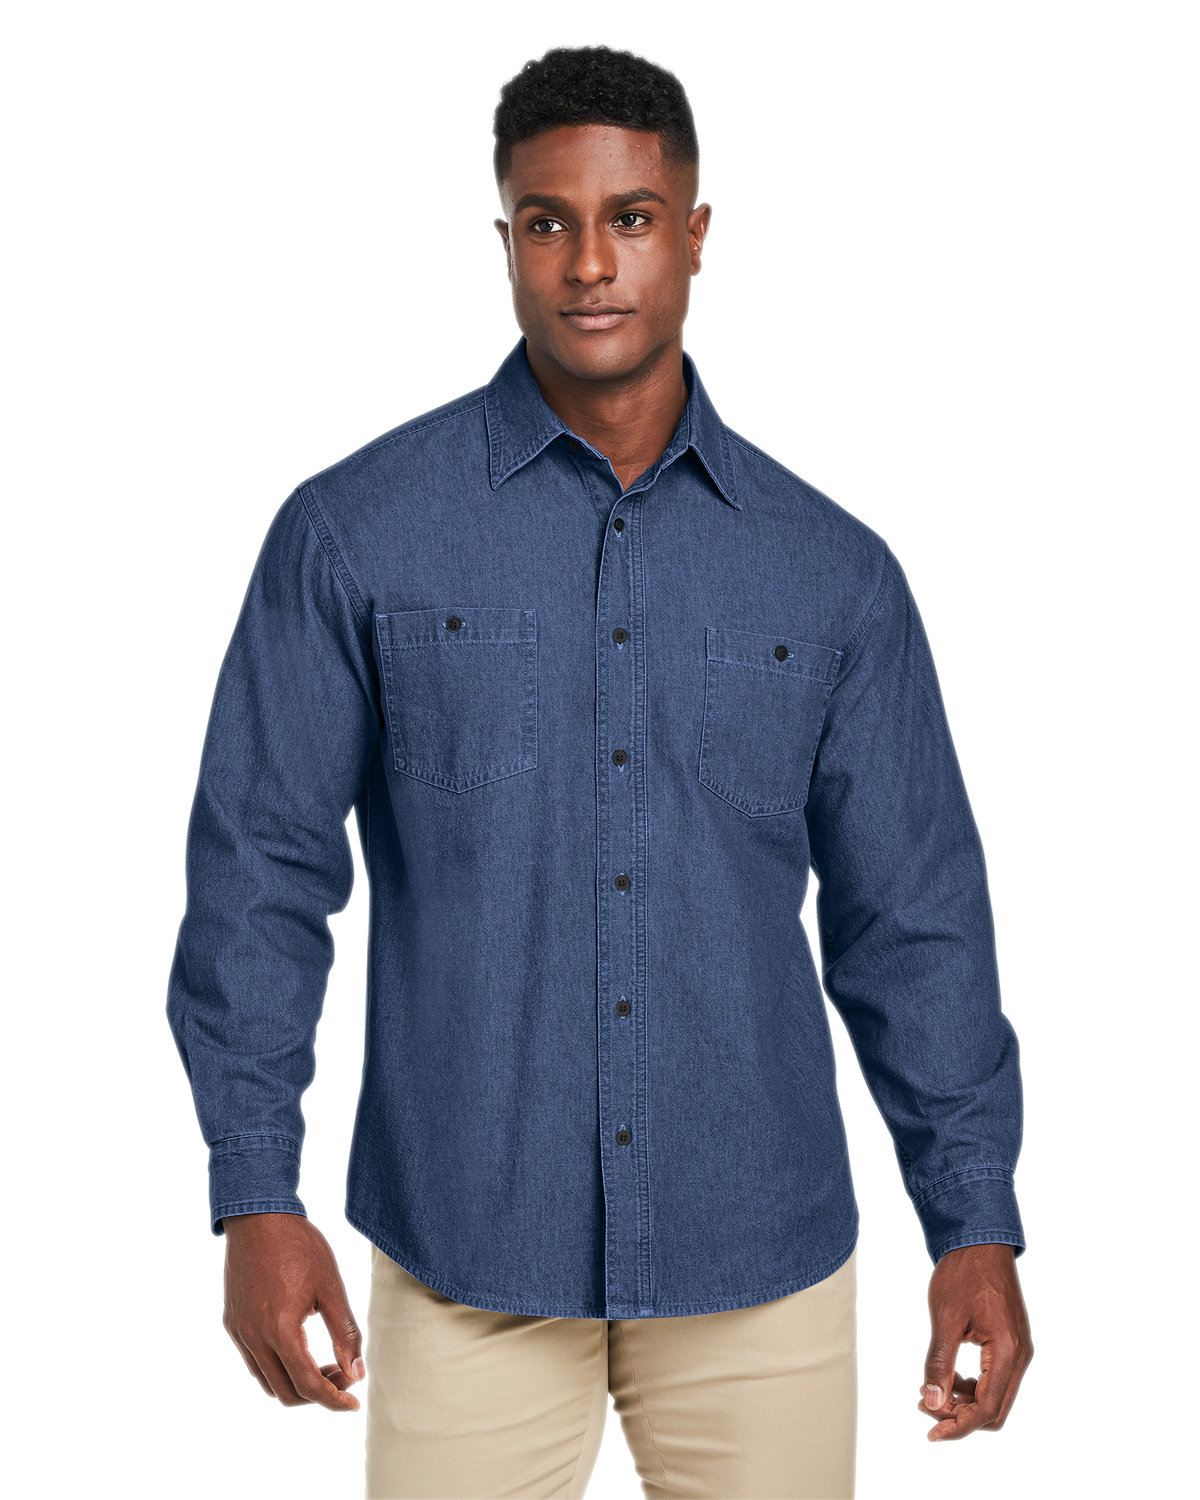 Harriton Men's Long-Sleeve Denim Shirt